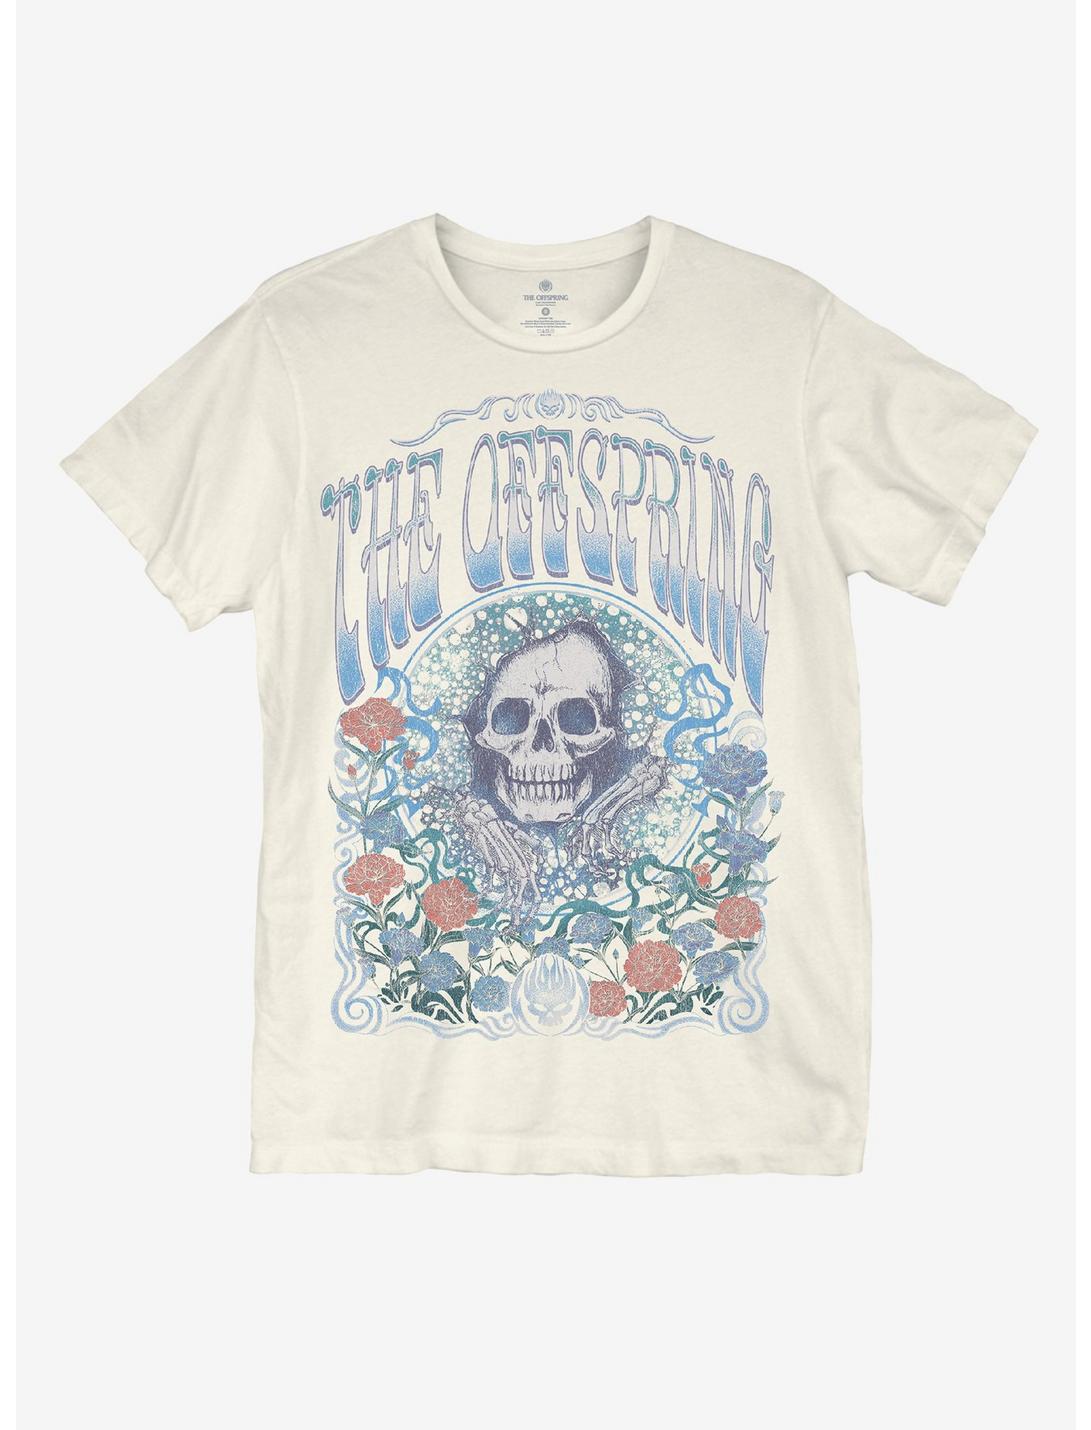 The Offspring Groovy Skull Boyfriend Fit Girls T-Shirt, CREAM, hi-res